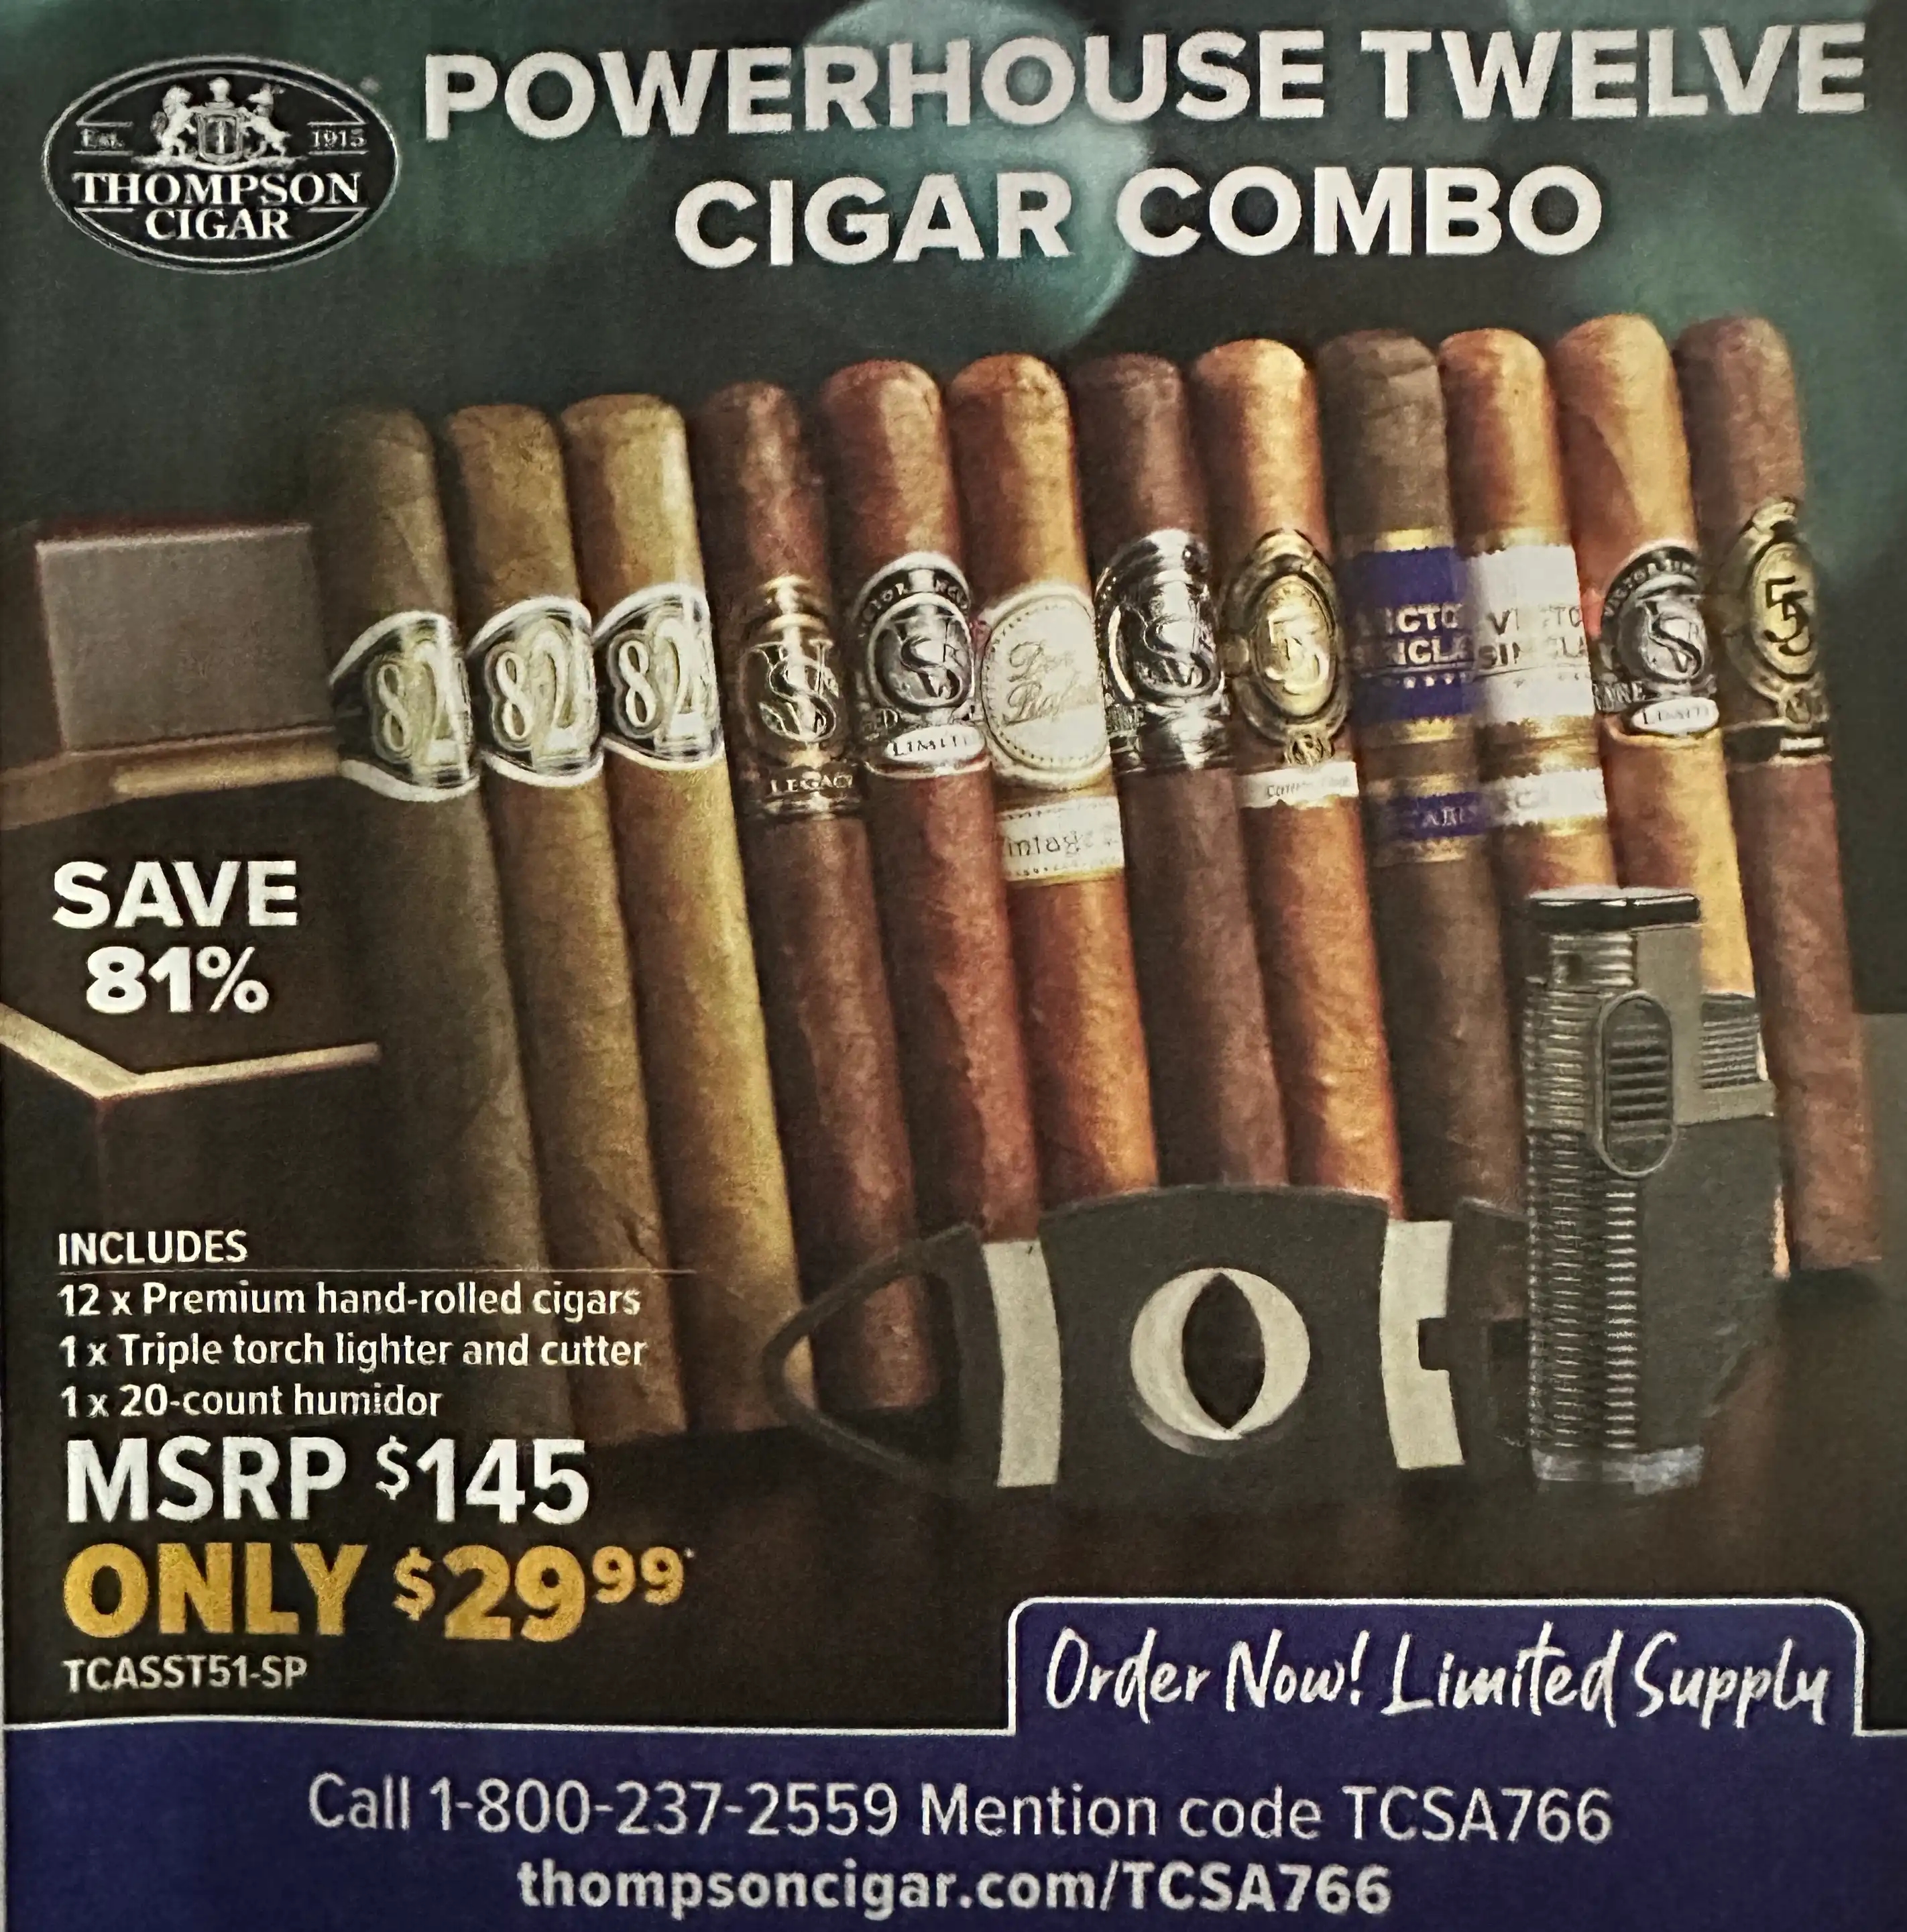 Thompson Cigar Powerhose Twelve Cigar Combo Promo Code - Expires 09/15/2023